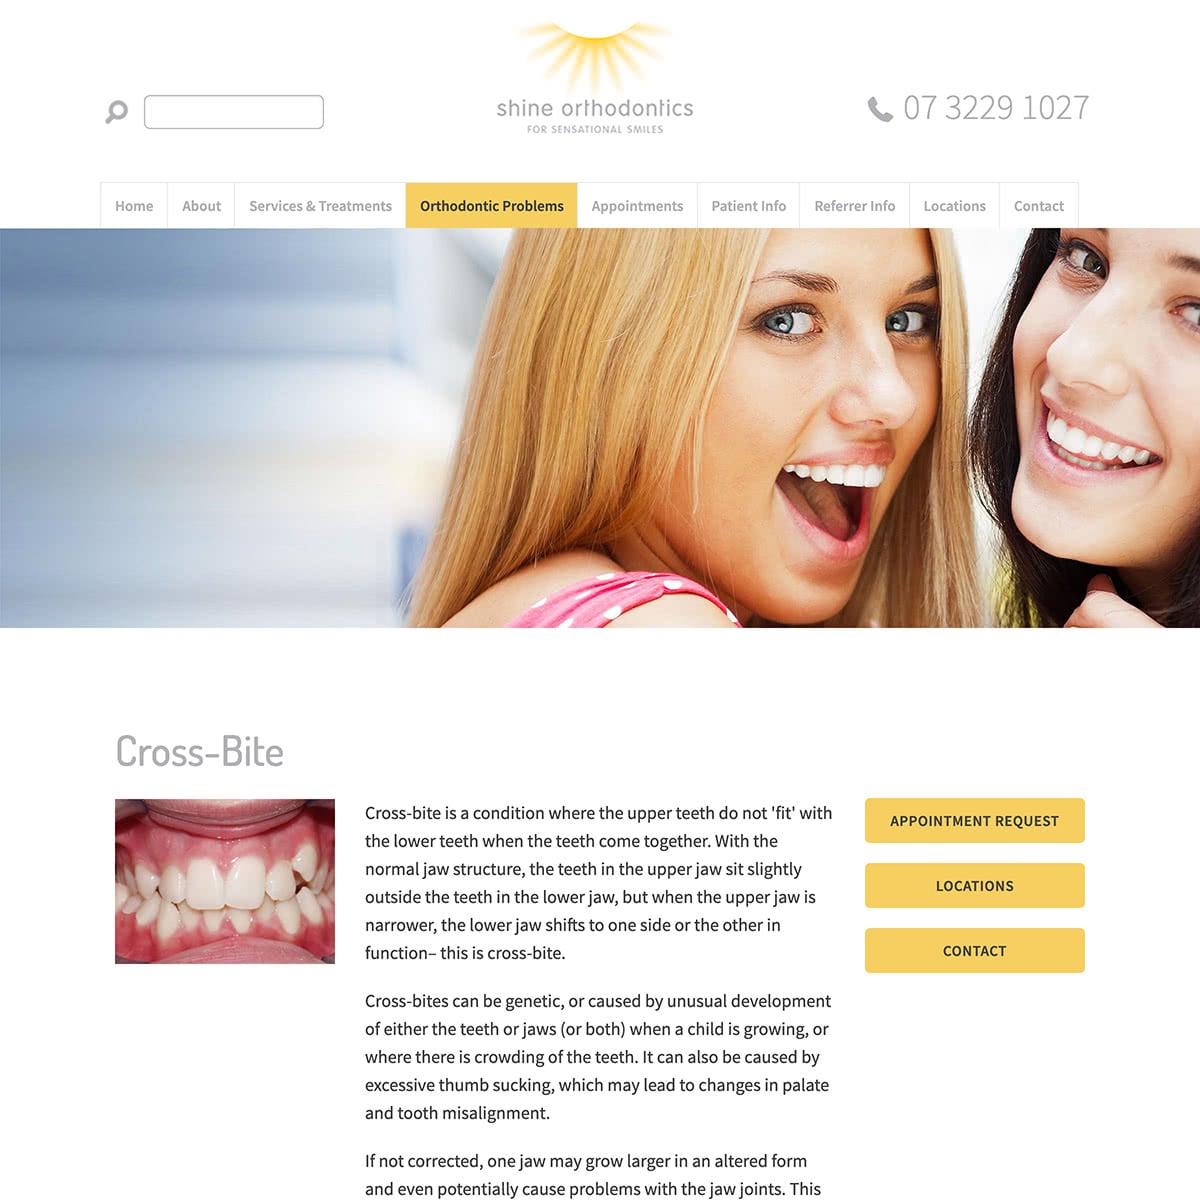 Shine Orthodontics - Orthodontic Problems